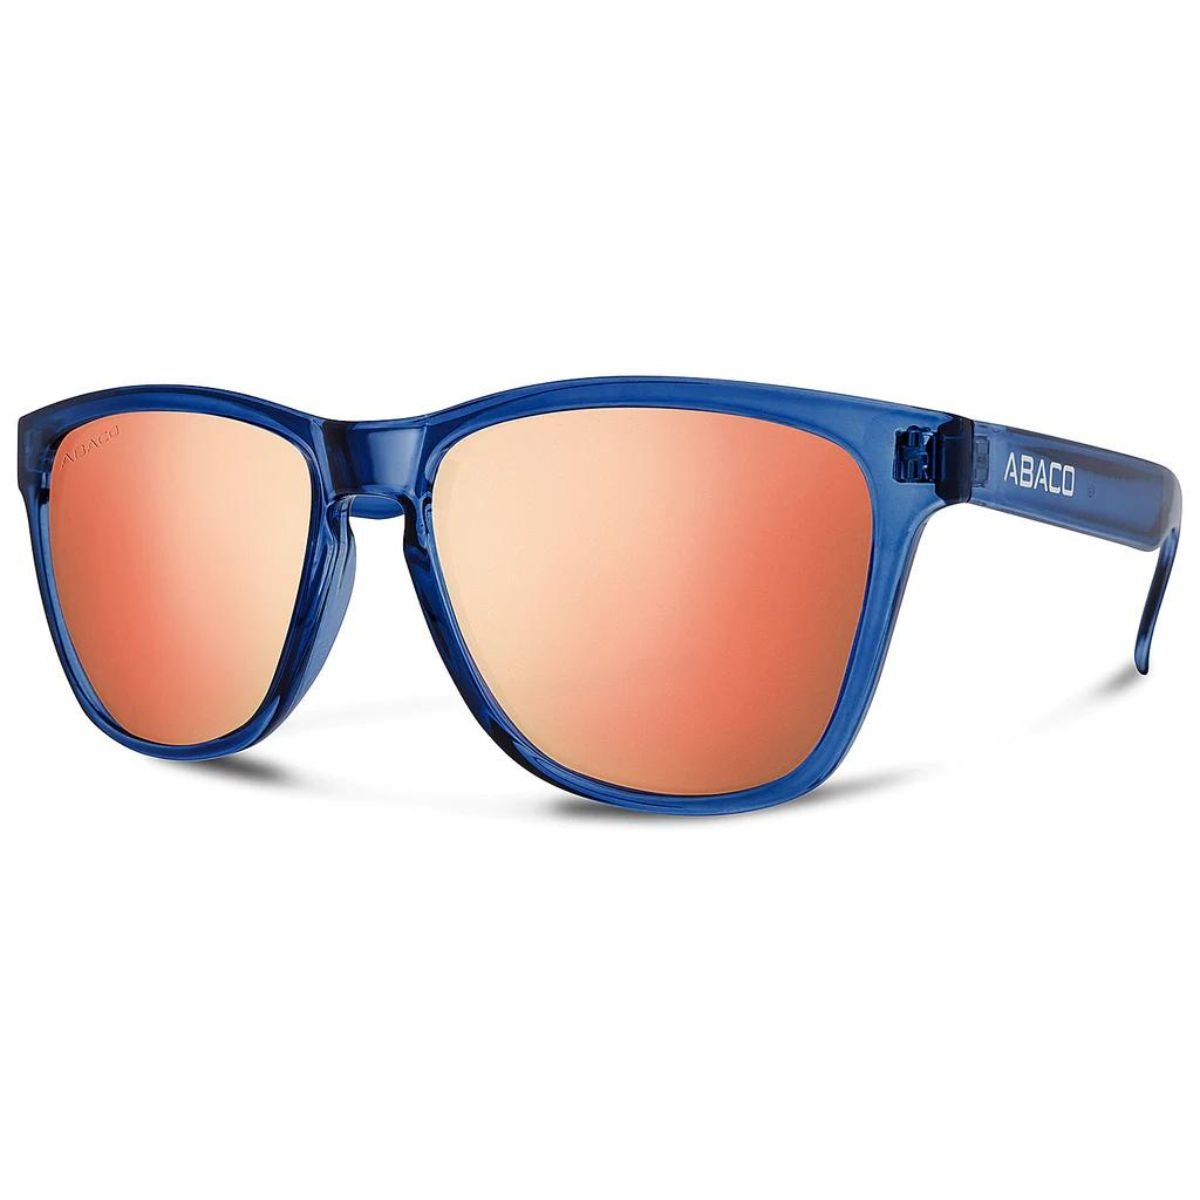 Abaco Kai Sunglasses in Midnight Blue/Sunrise - BoardCo